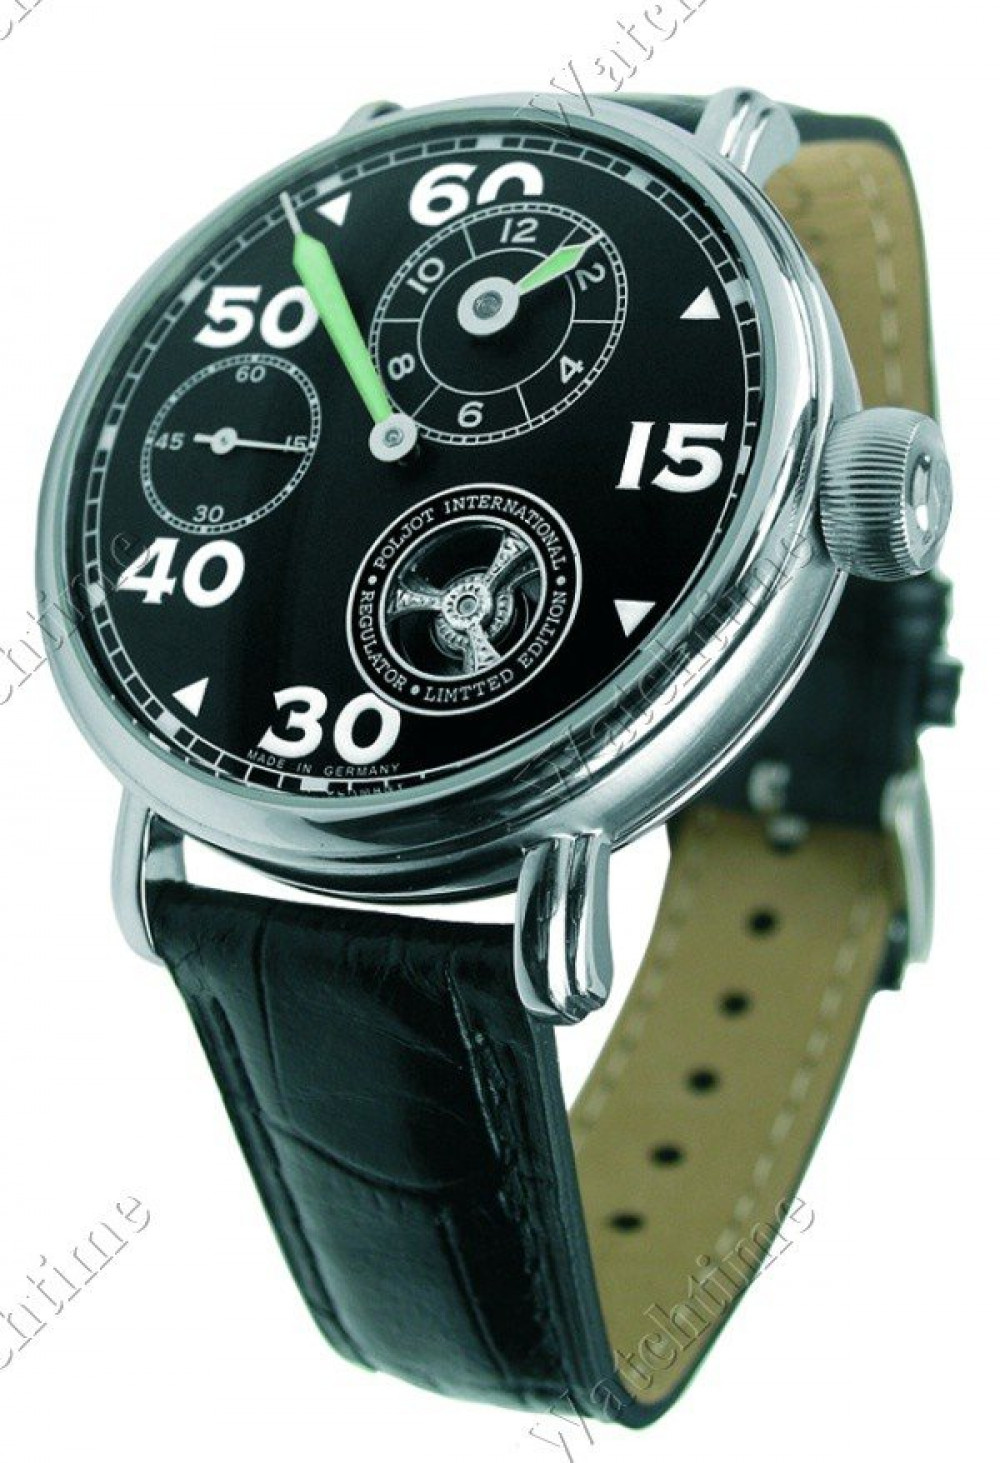 Zegarek firmy Poljot International, model Regulator mit offenem Federhaus